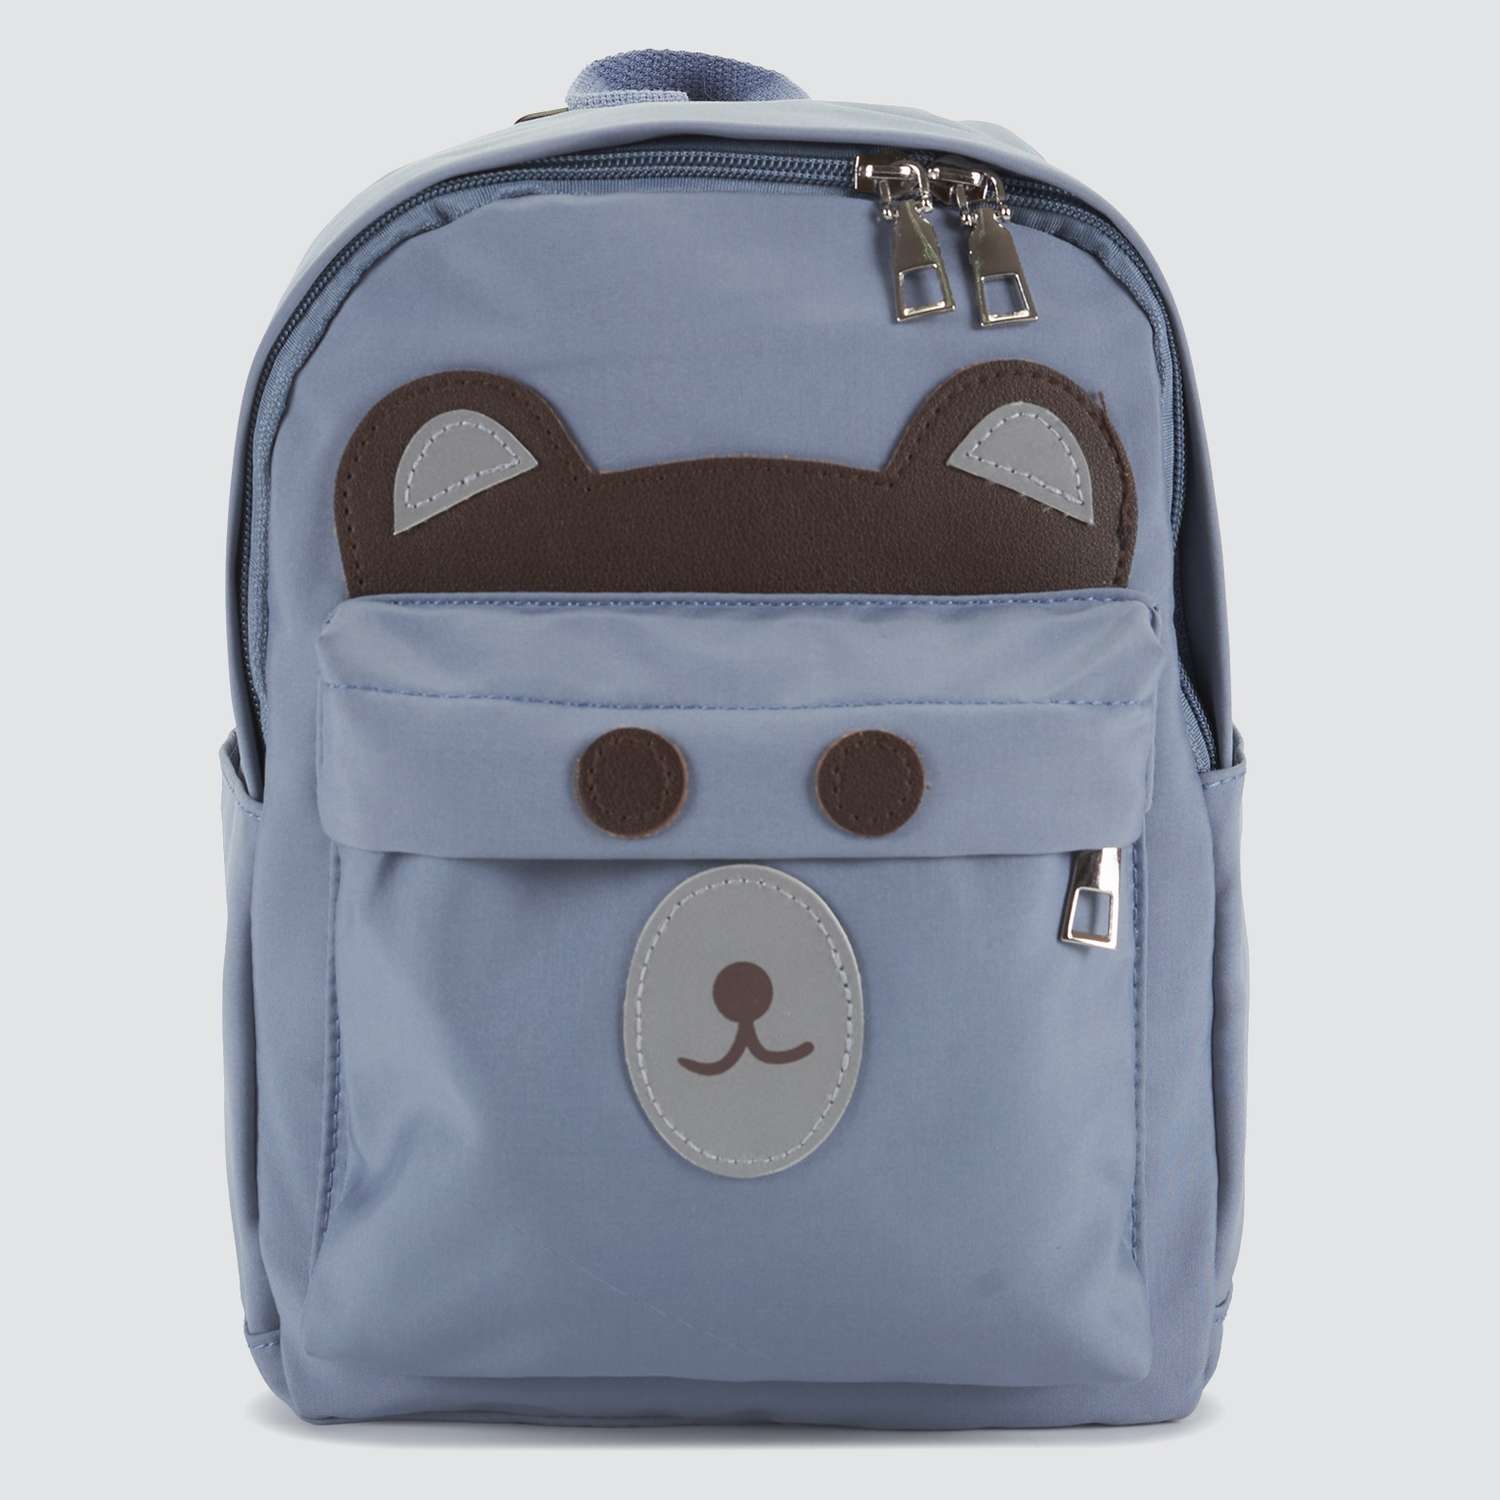 Детский рюкзак Journey 26801 синий медвежонок - фото 2